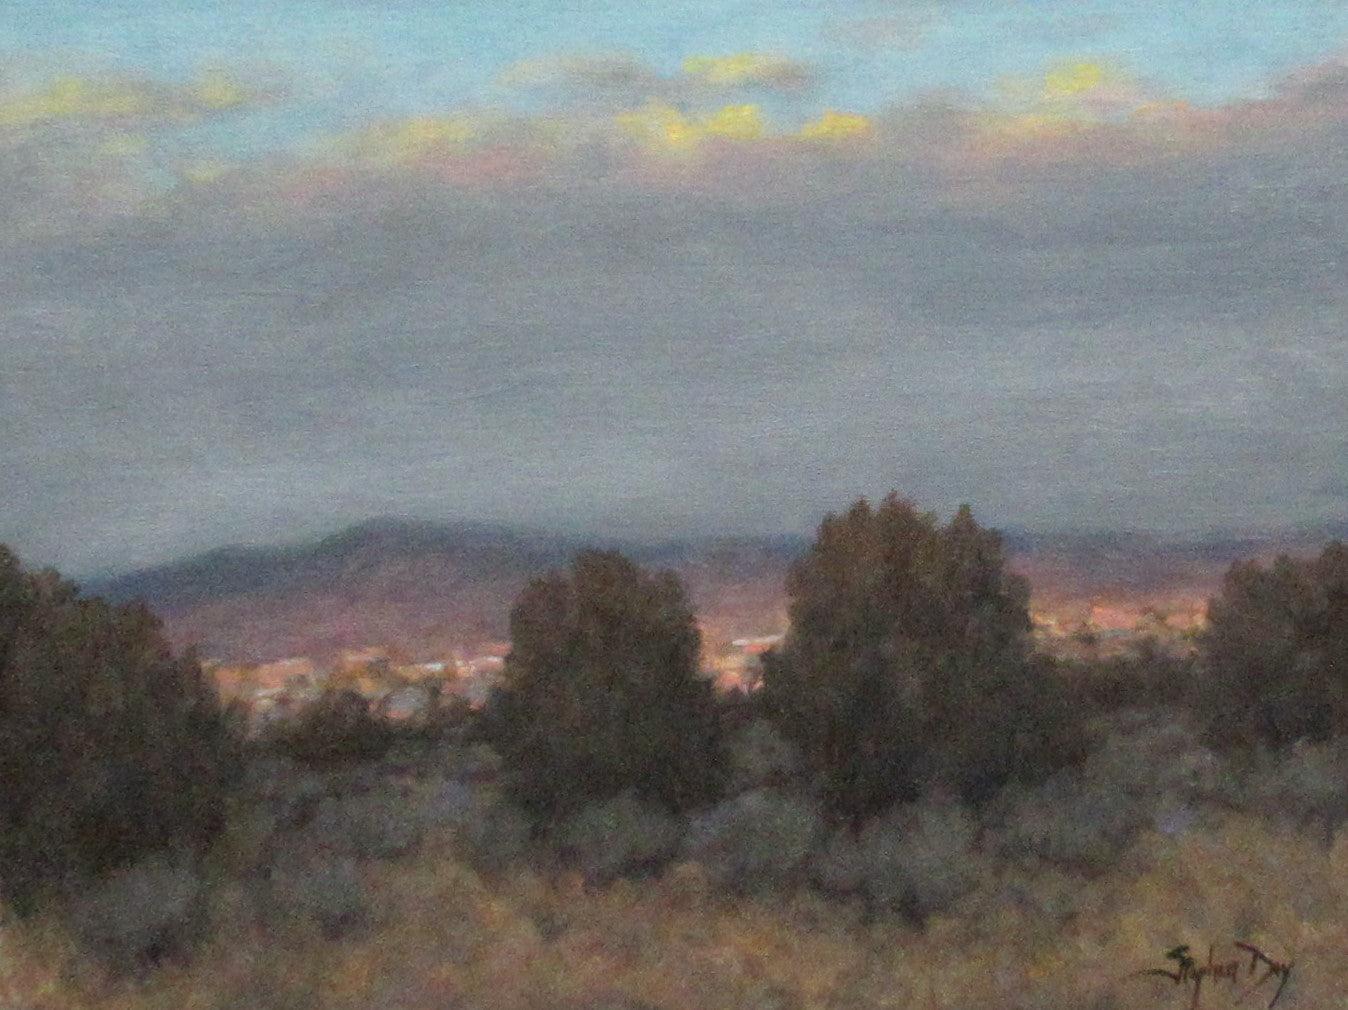 First Light - Santa Fe-Painting-Stephen Day-Sorrel Sky Gallery